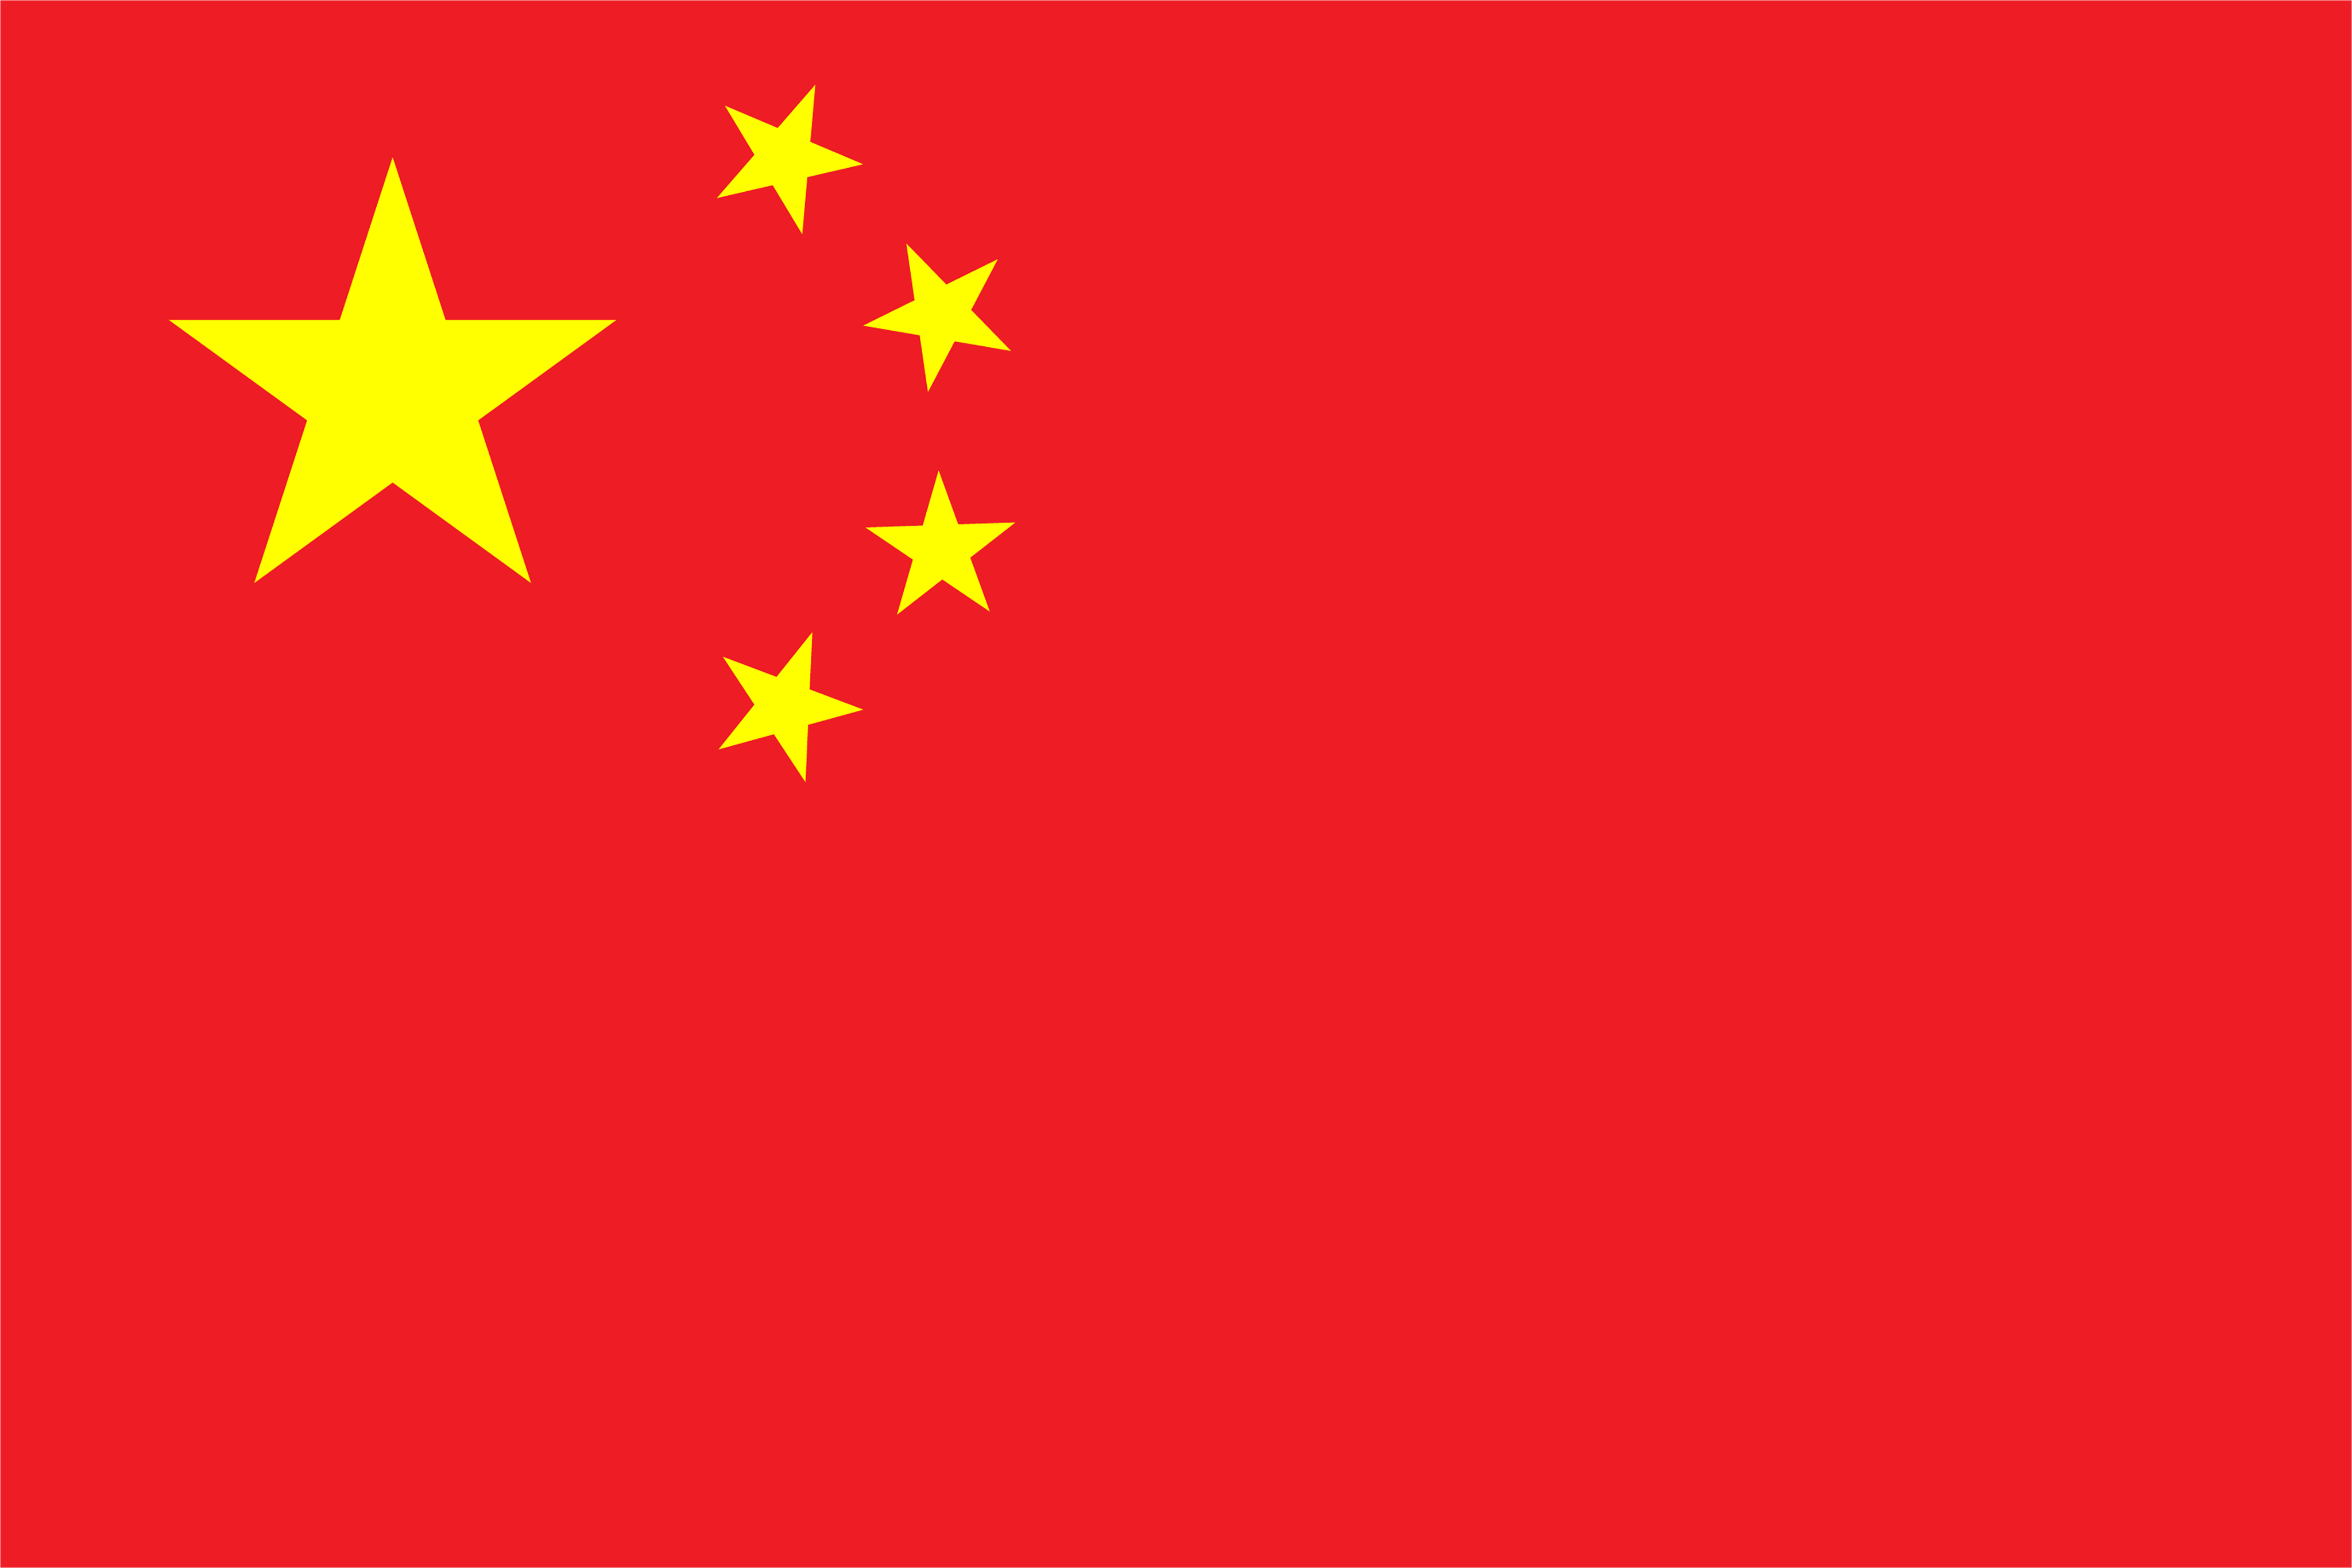 China_flag